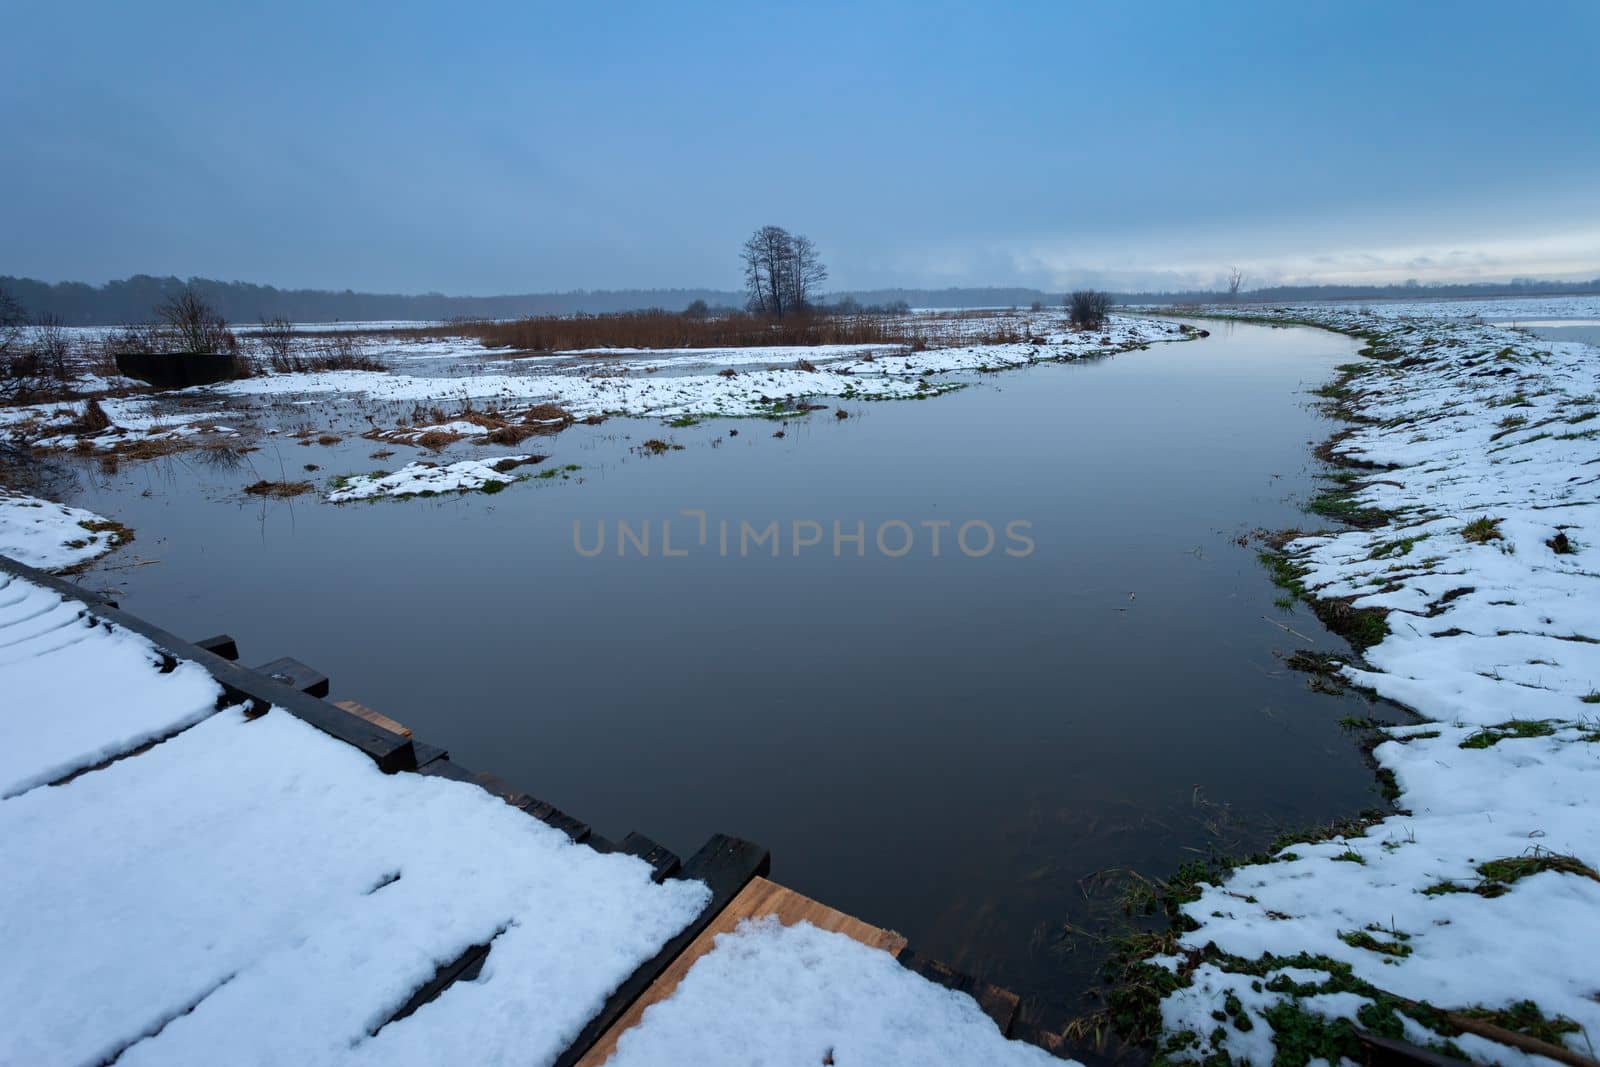 View from the bridge on the river Uherka flooding the meadows, Czulczyce, Poland by darekb22